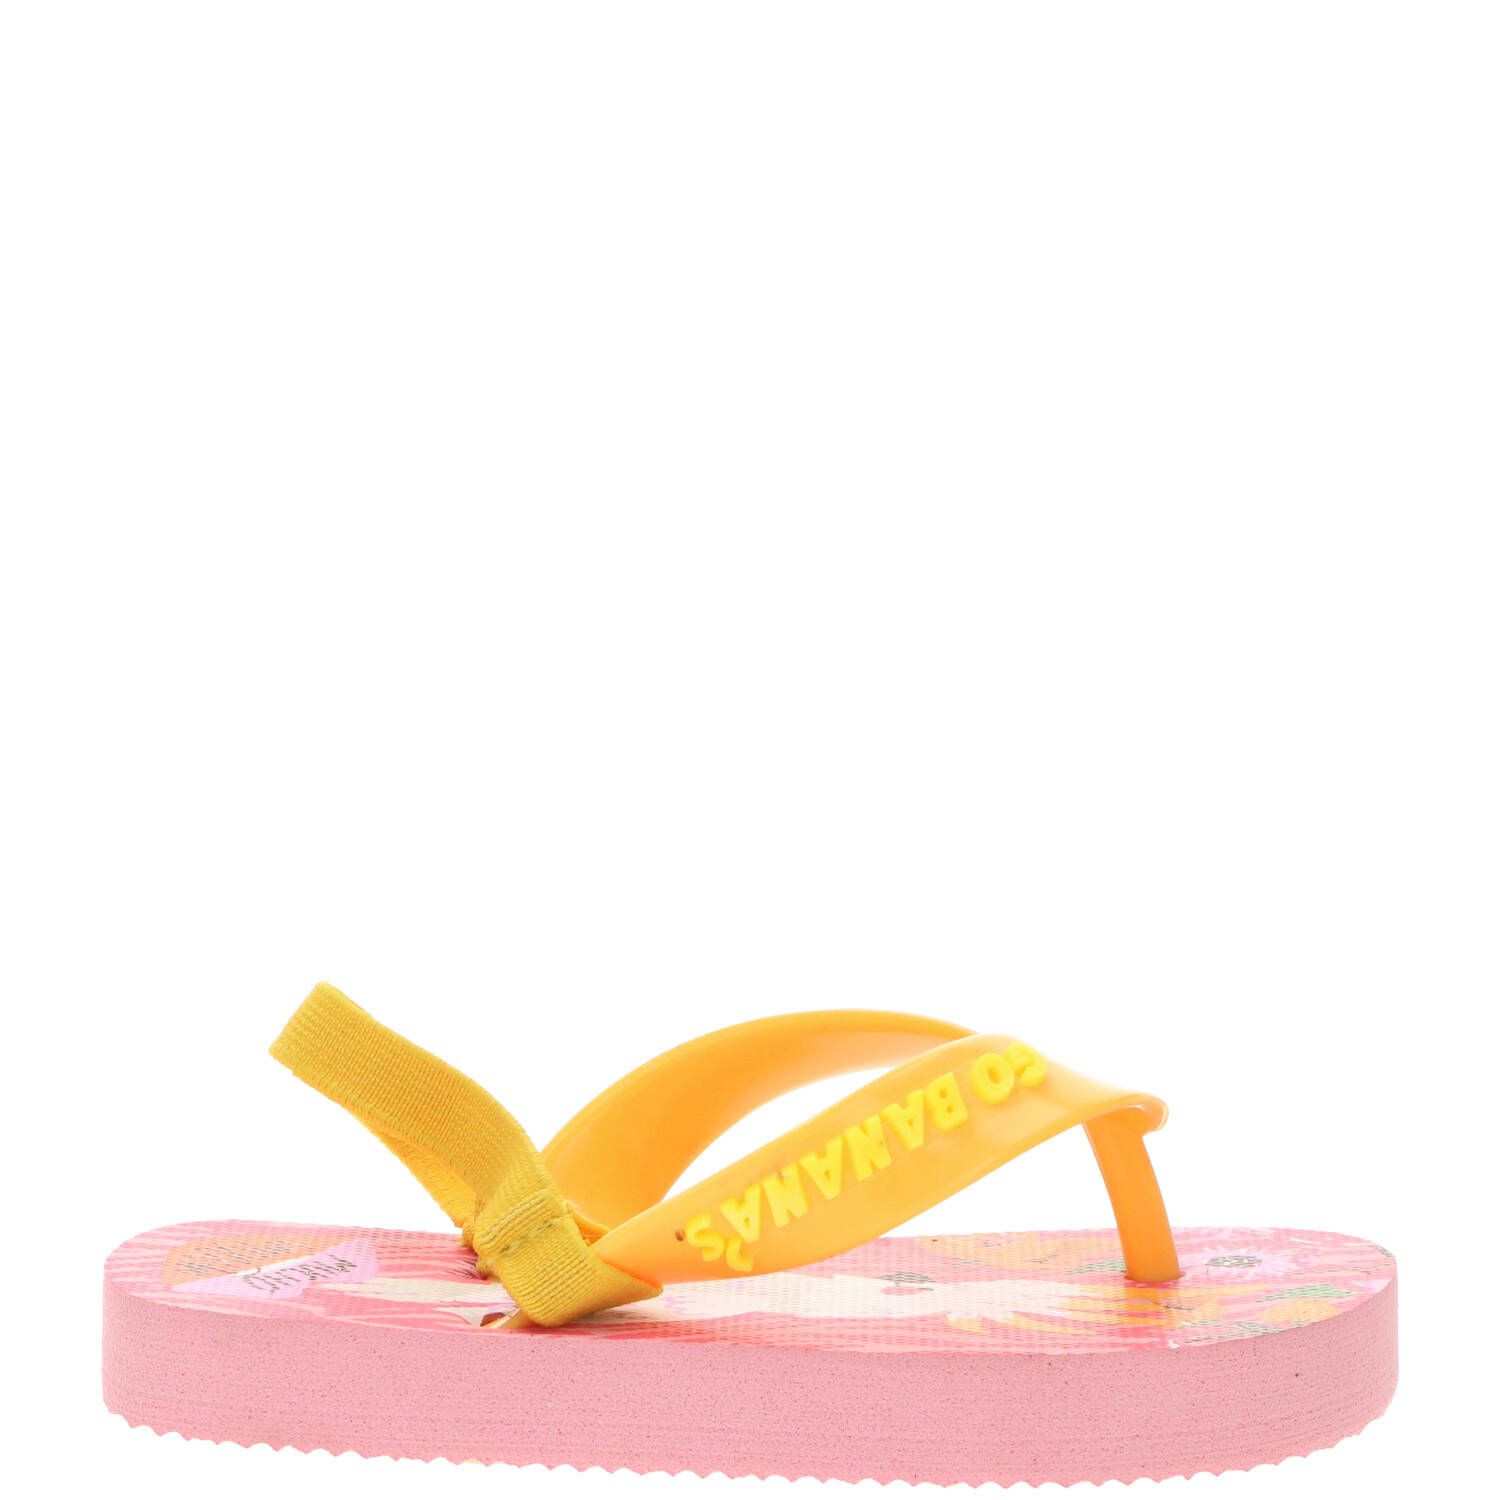 Go Banana's kakatoe slipper, Slippers, Meisje, Maat 26, roze/multi